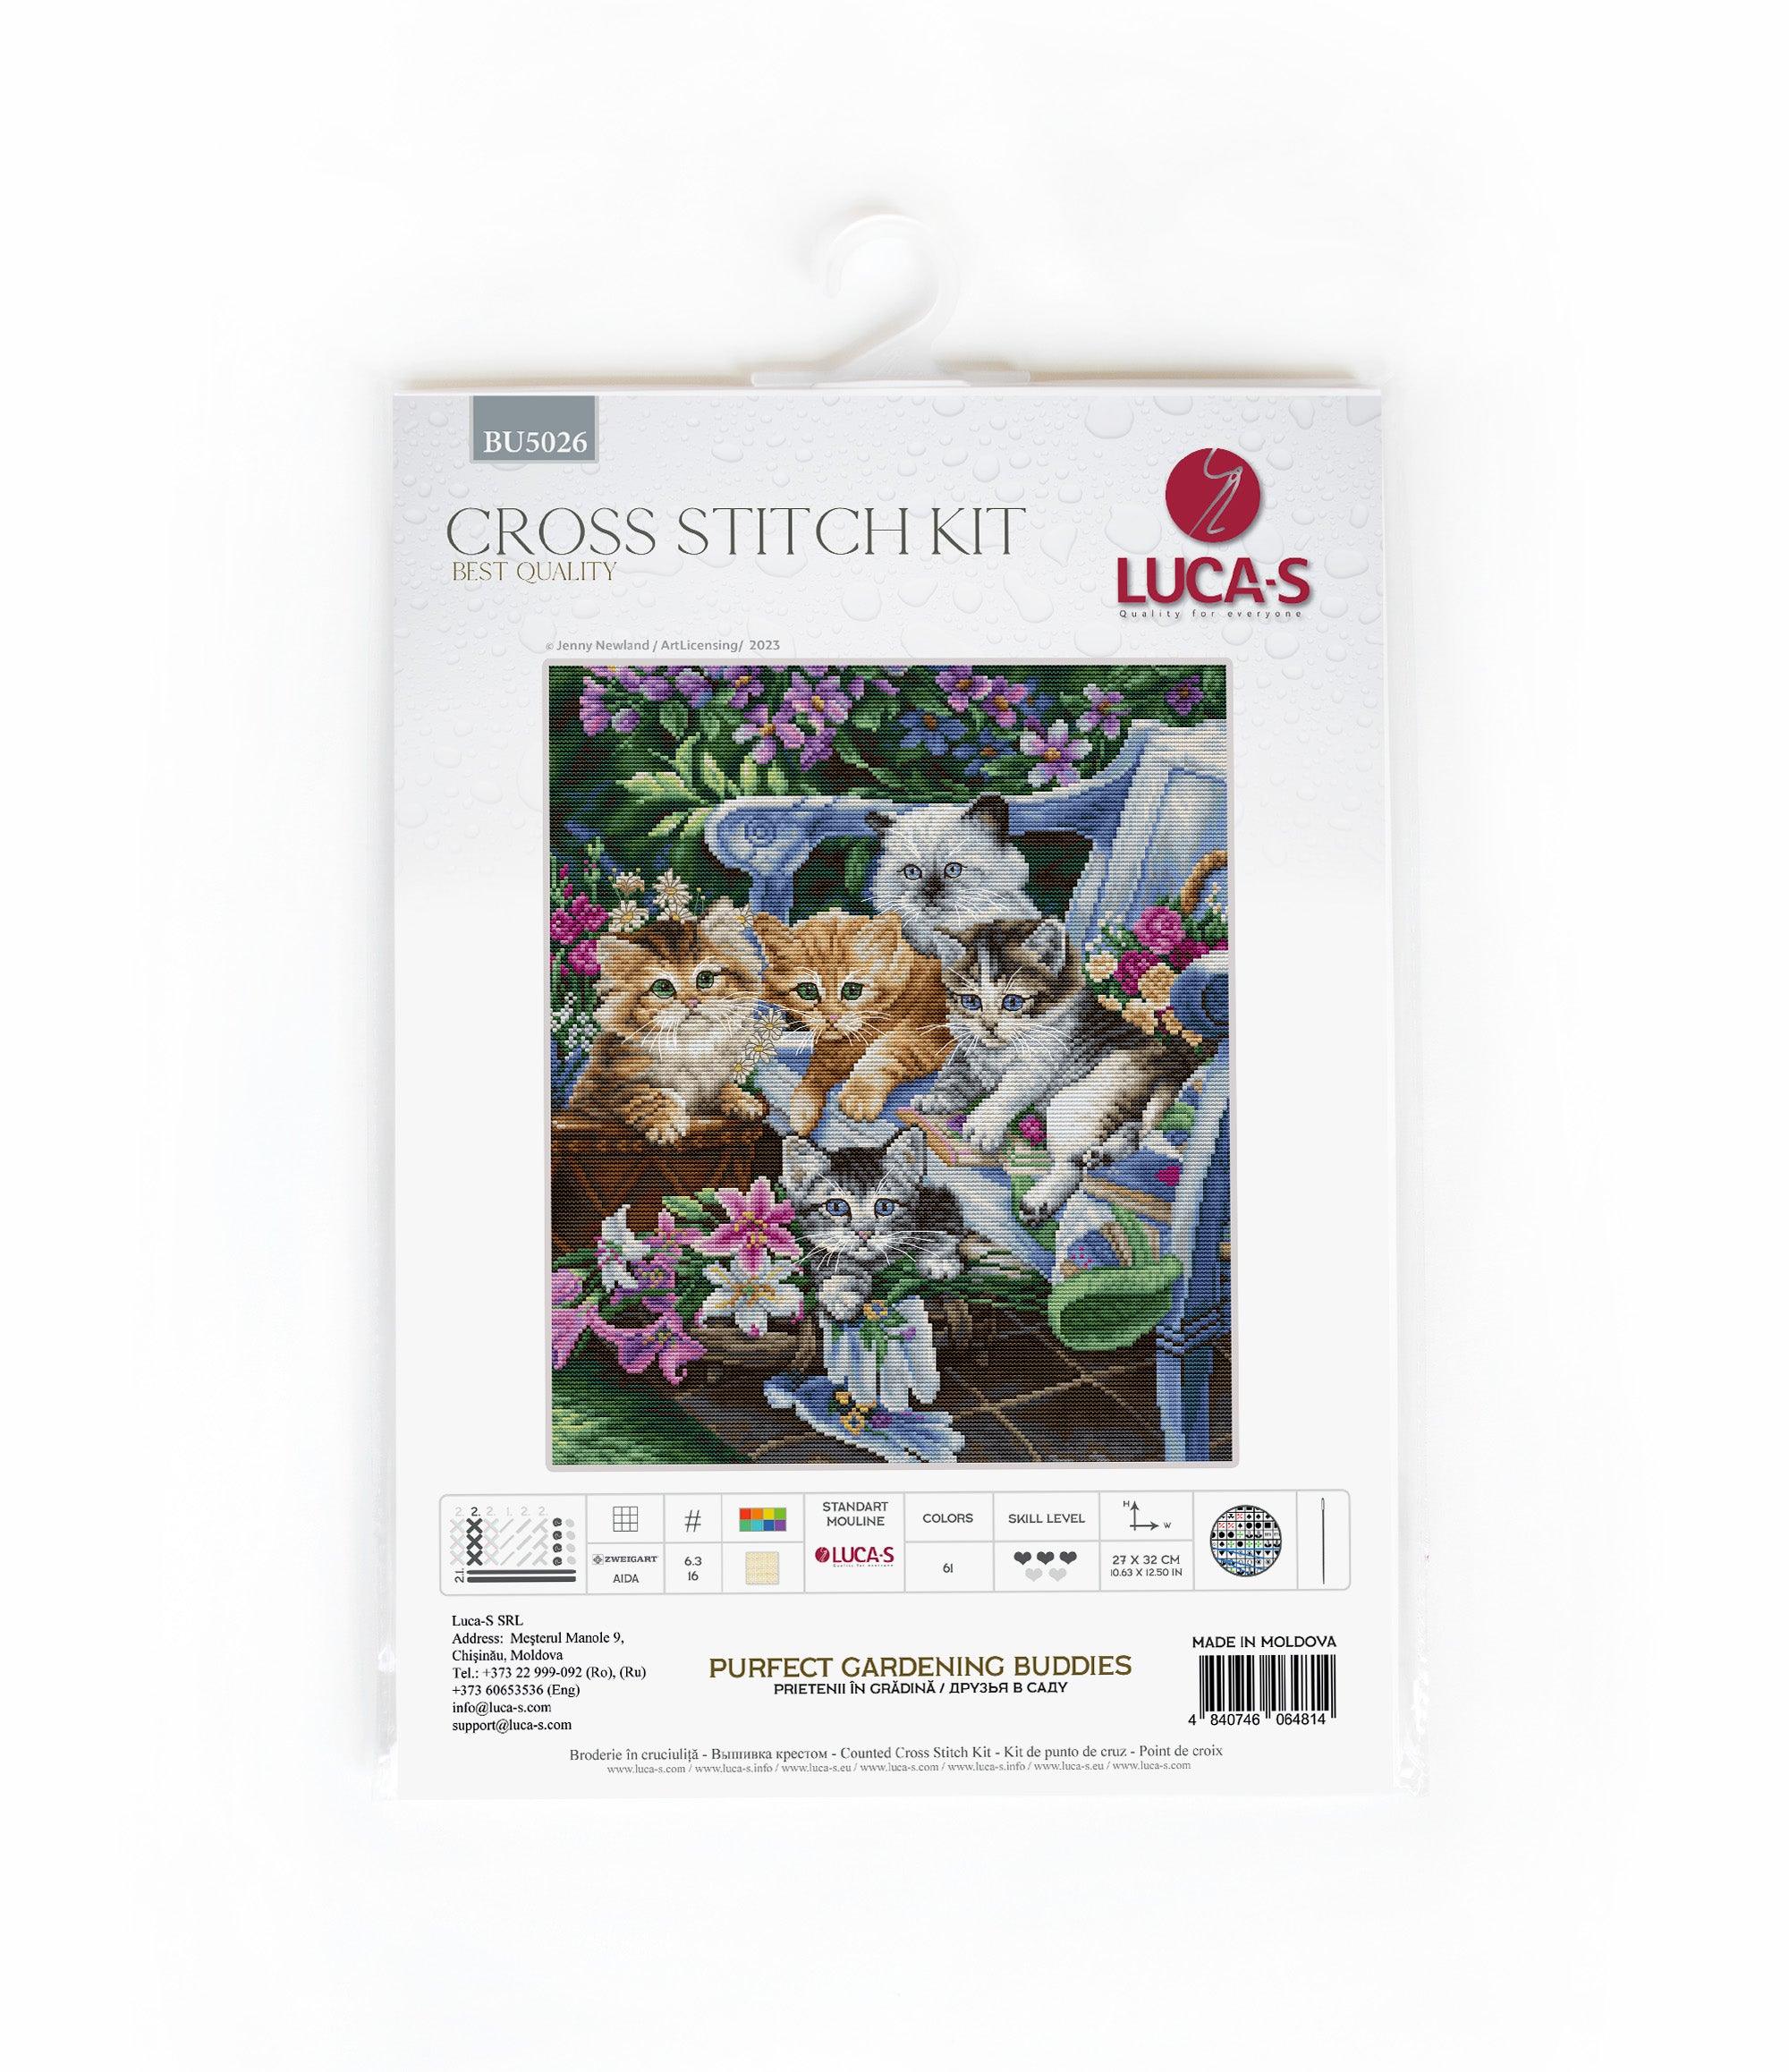 Cross Stitch Kit Luca-S - Perfect Gardening Buddies, BU5026 - Luca-S Cross Stitch Kits